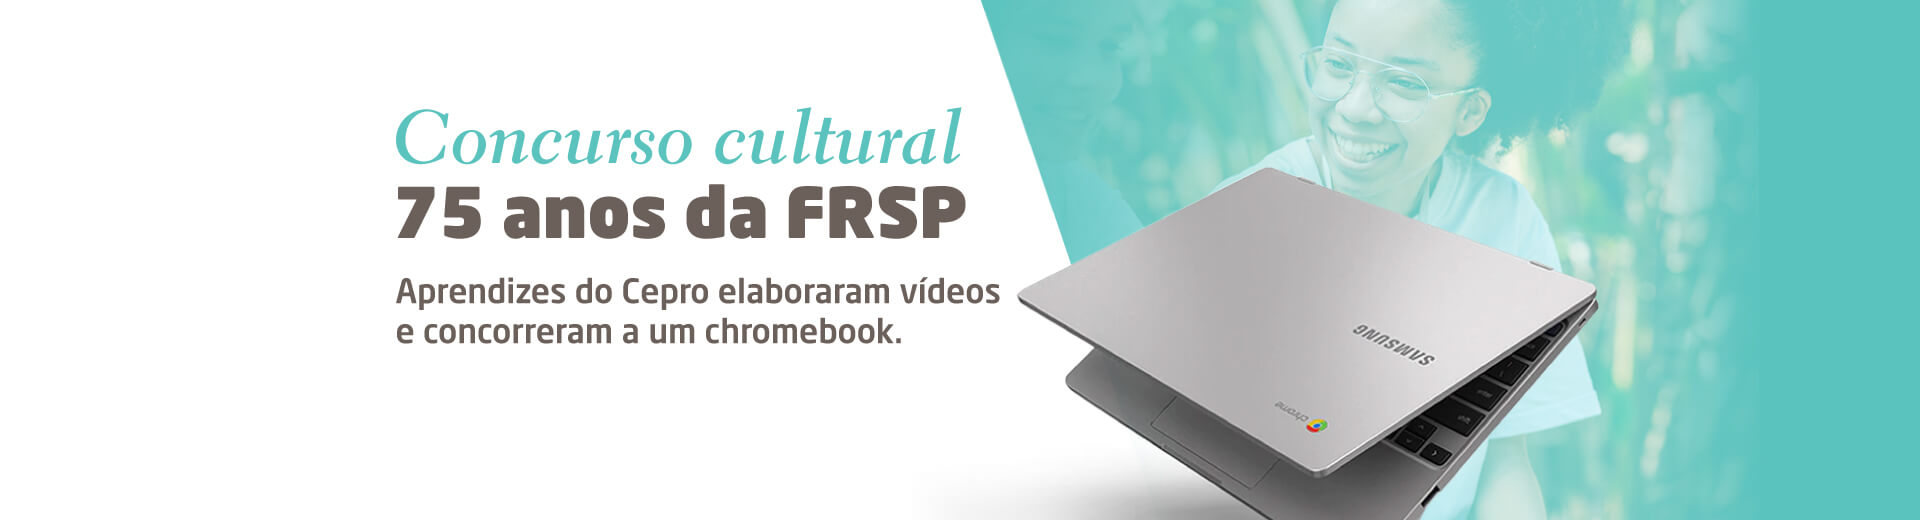 Concurso cultural - 75 anos da FRSP